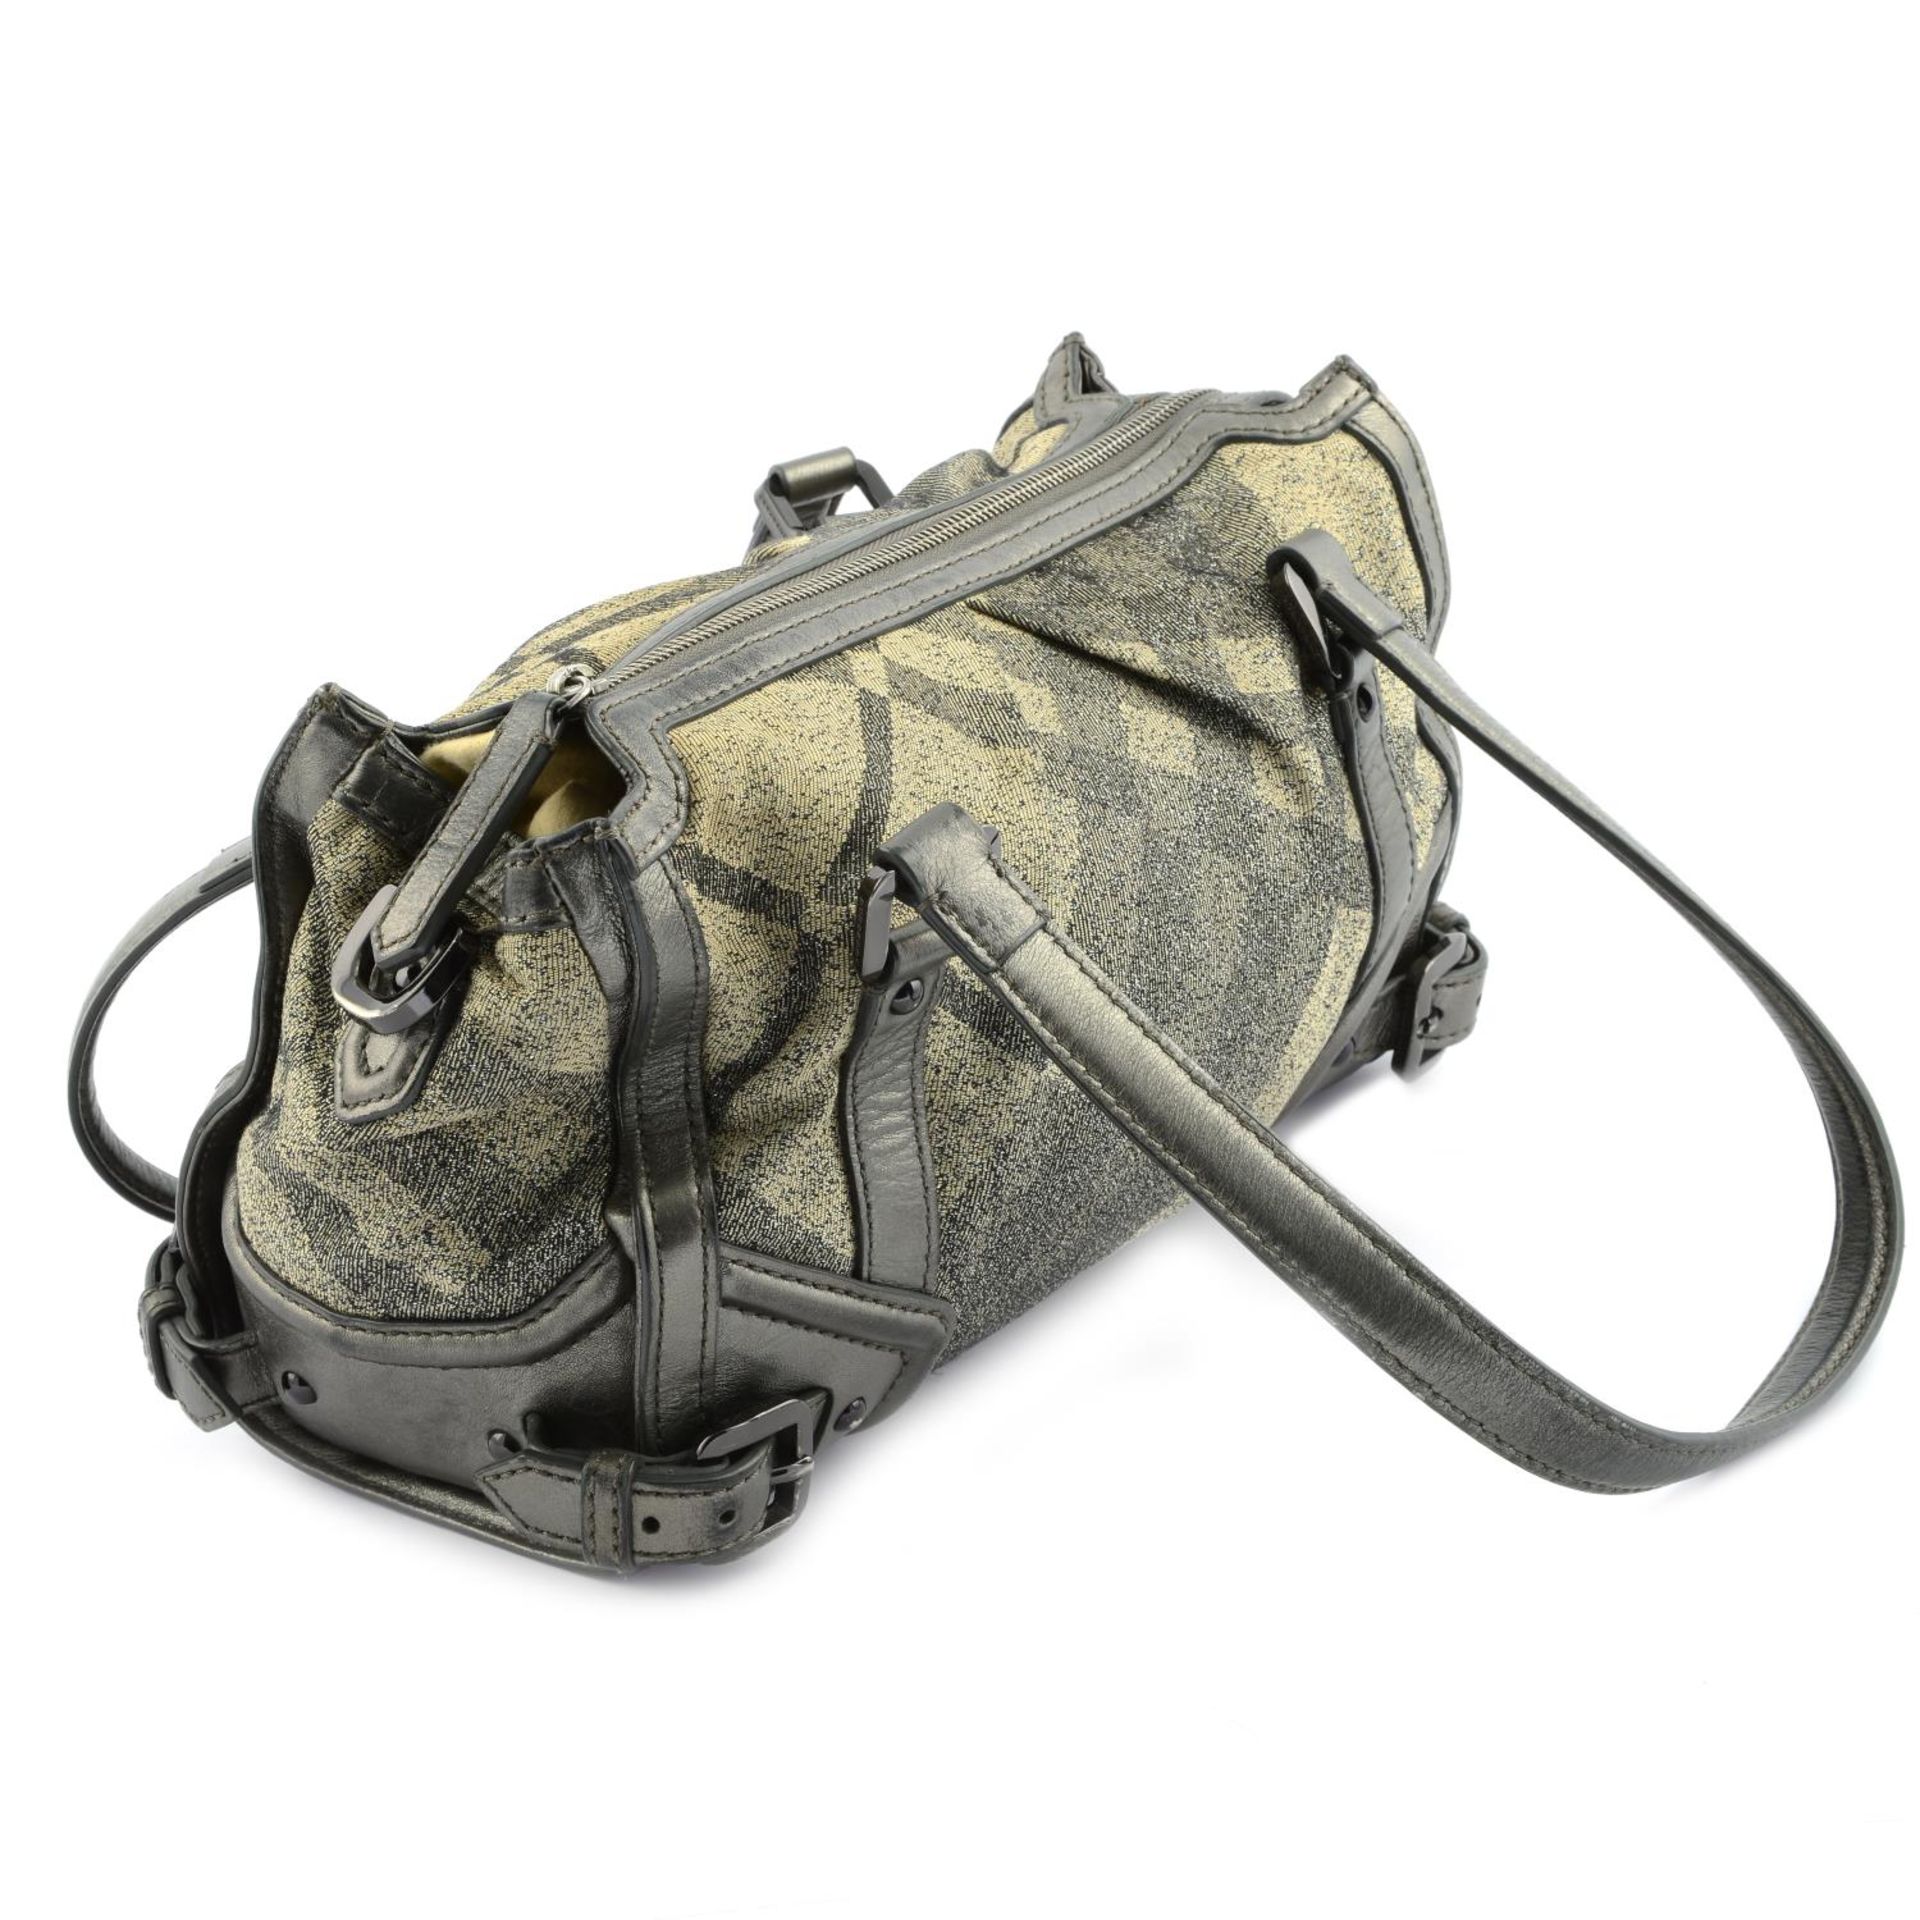 BURBERRY - a metallic canvas handbag. - Bild 3 aus 6